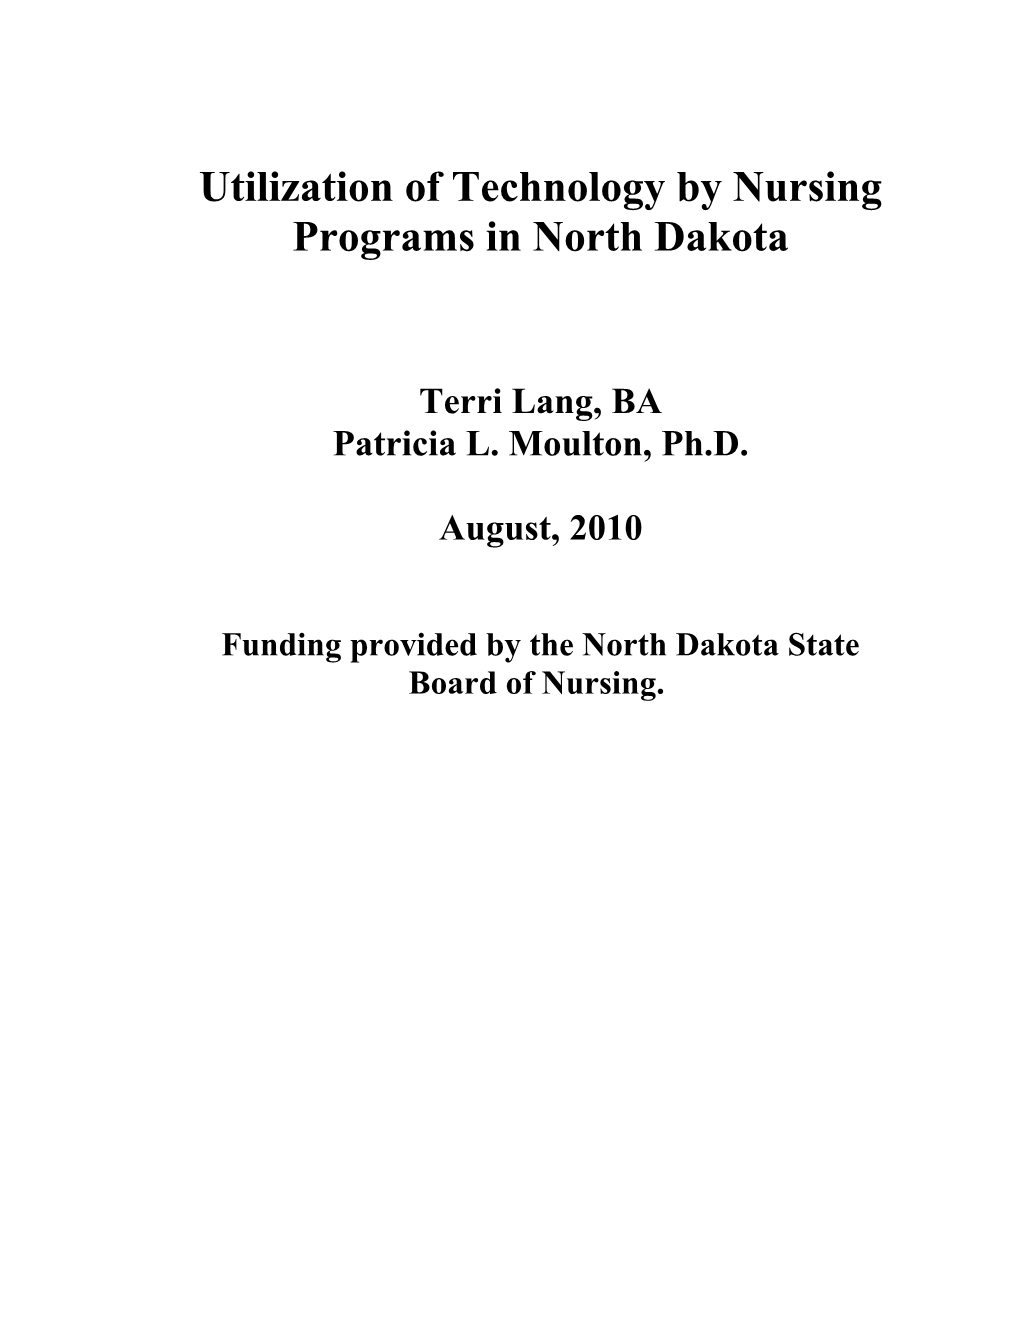 North Dakota Nursing Programs Use of Technology: a Statewide Assessment